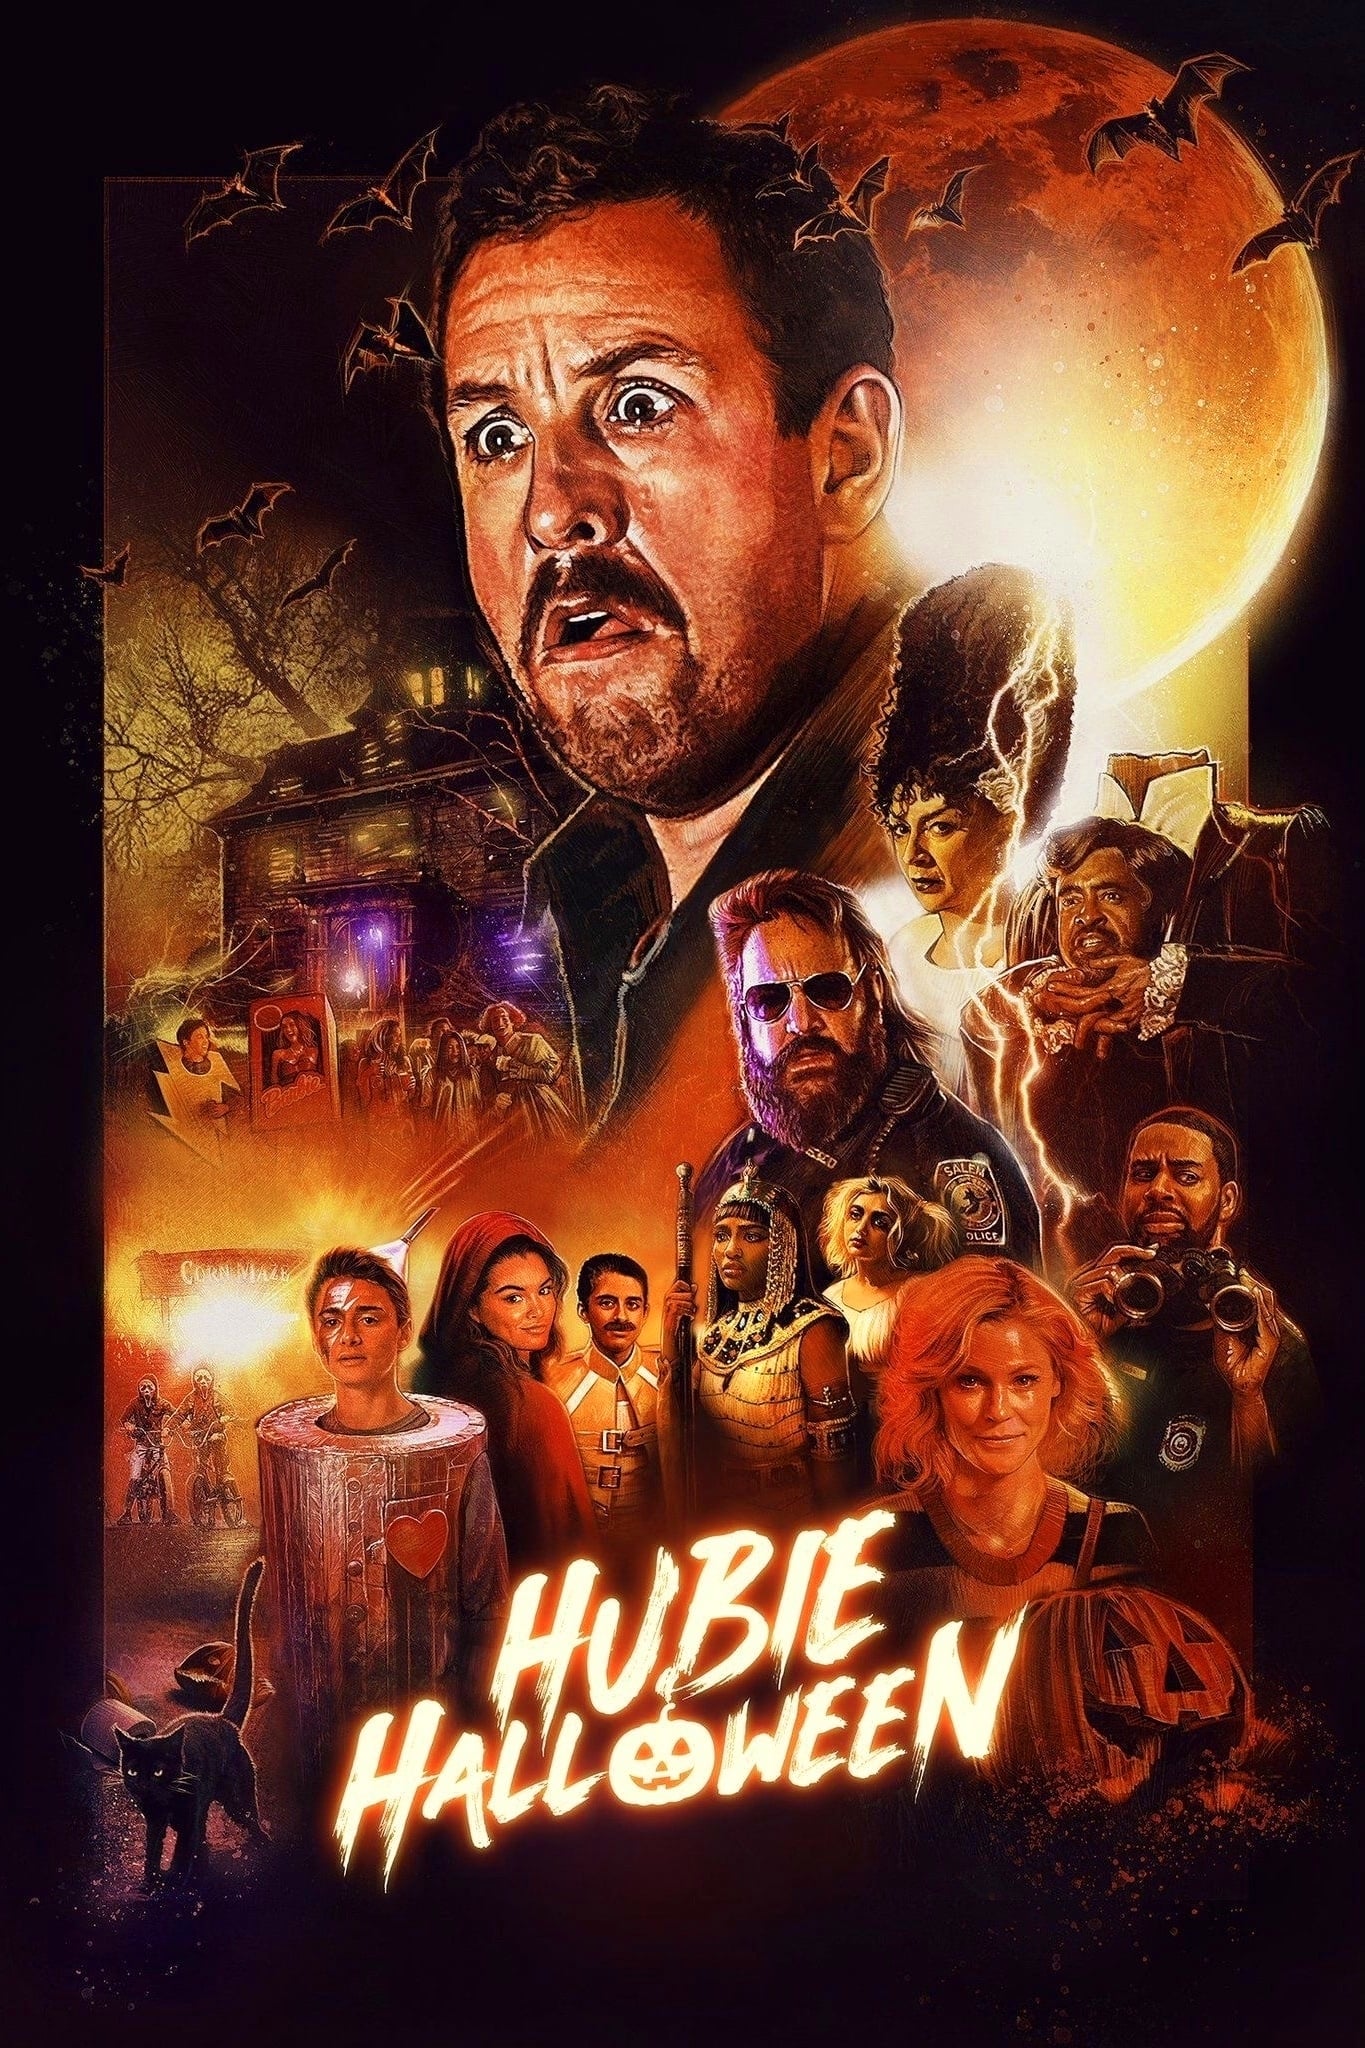 Banner Phim Halloween Của Hubie (Hubie Halloween)